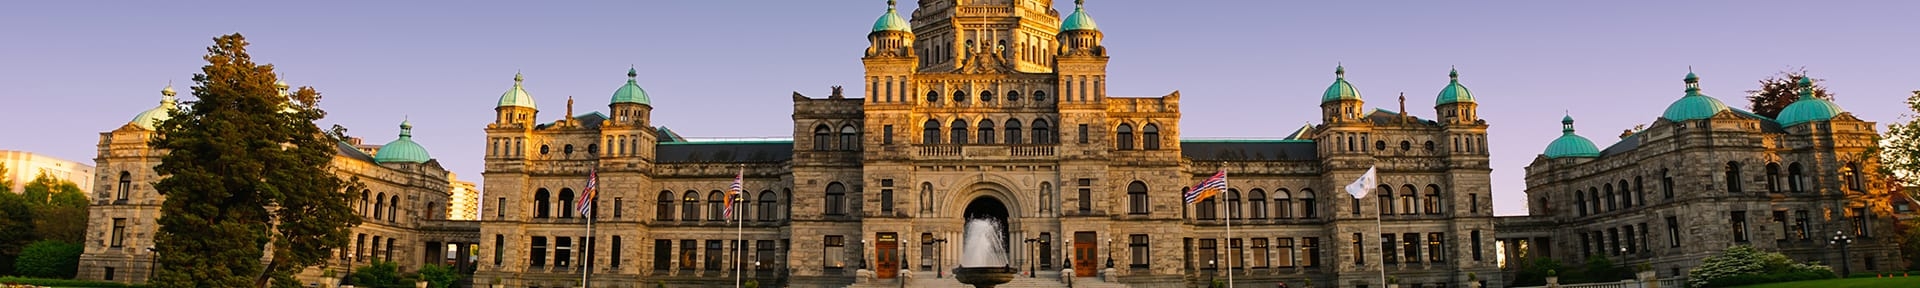 Victoria BC parliament building